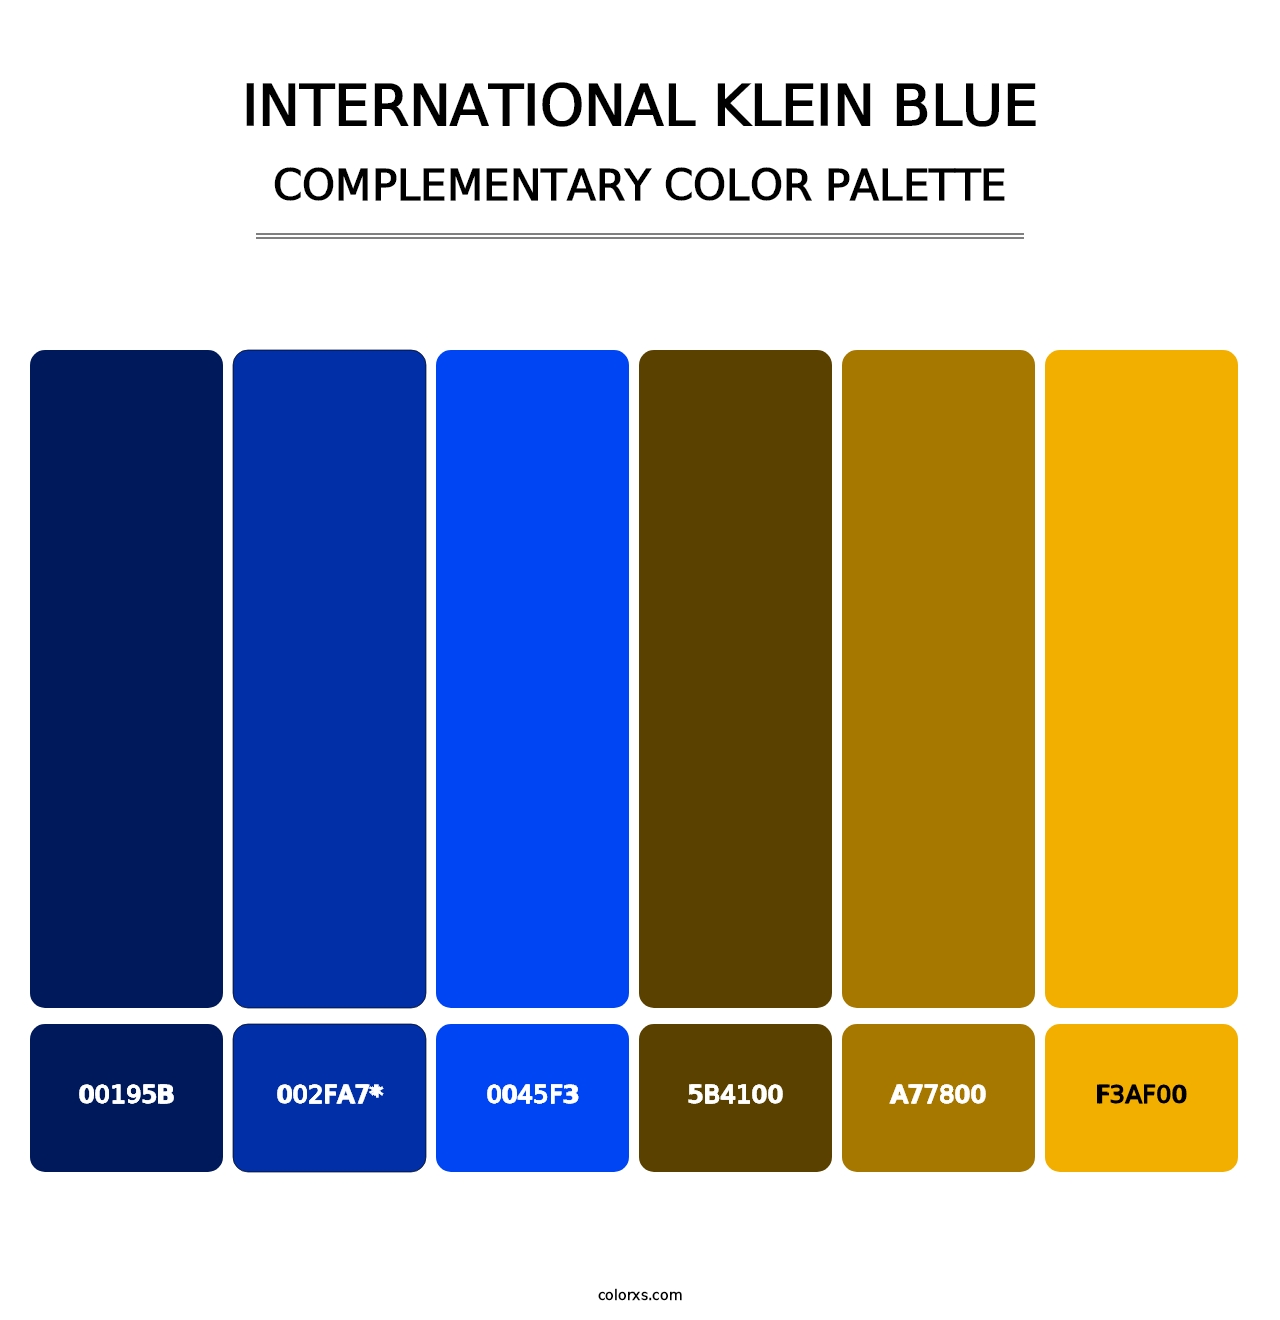 International Klein Blue - Complementary Color Palette